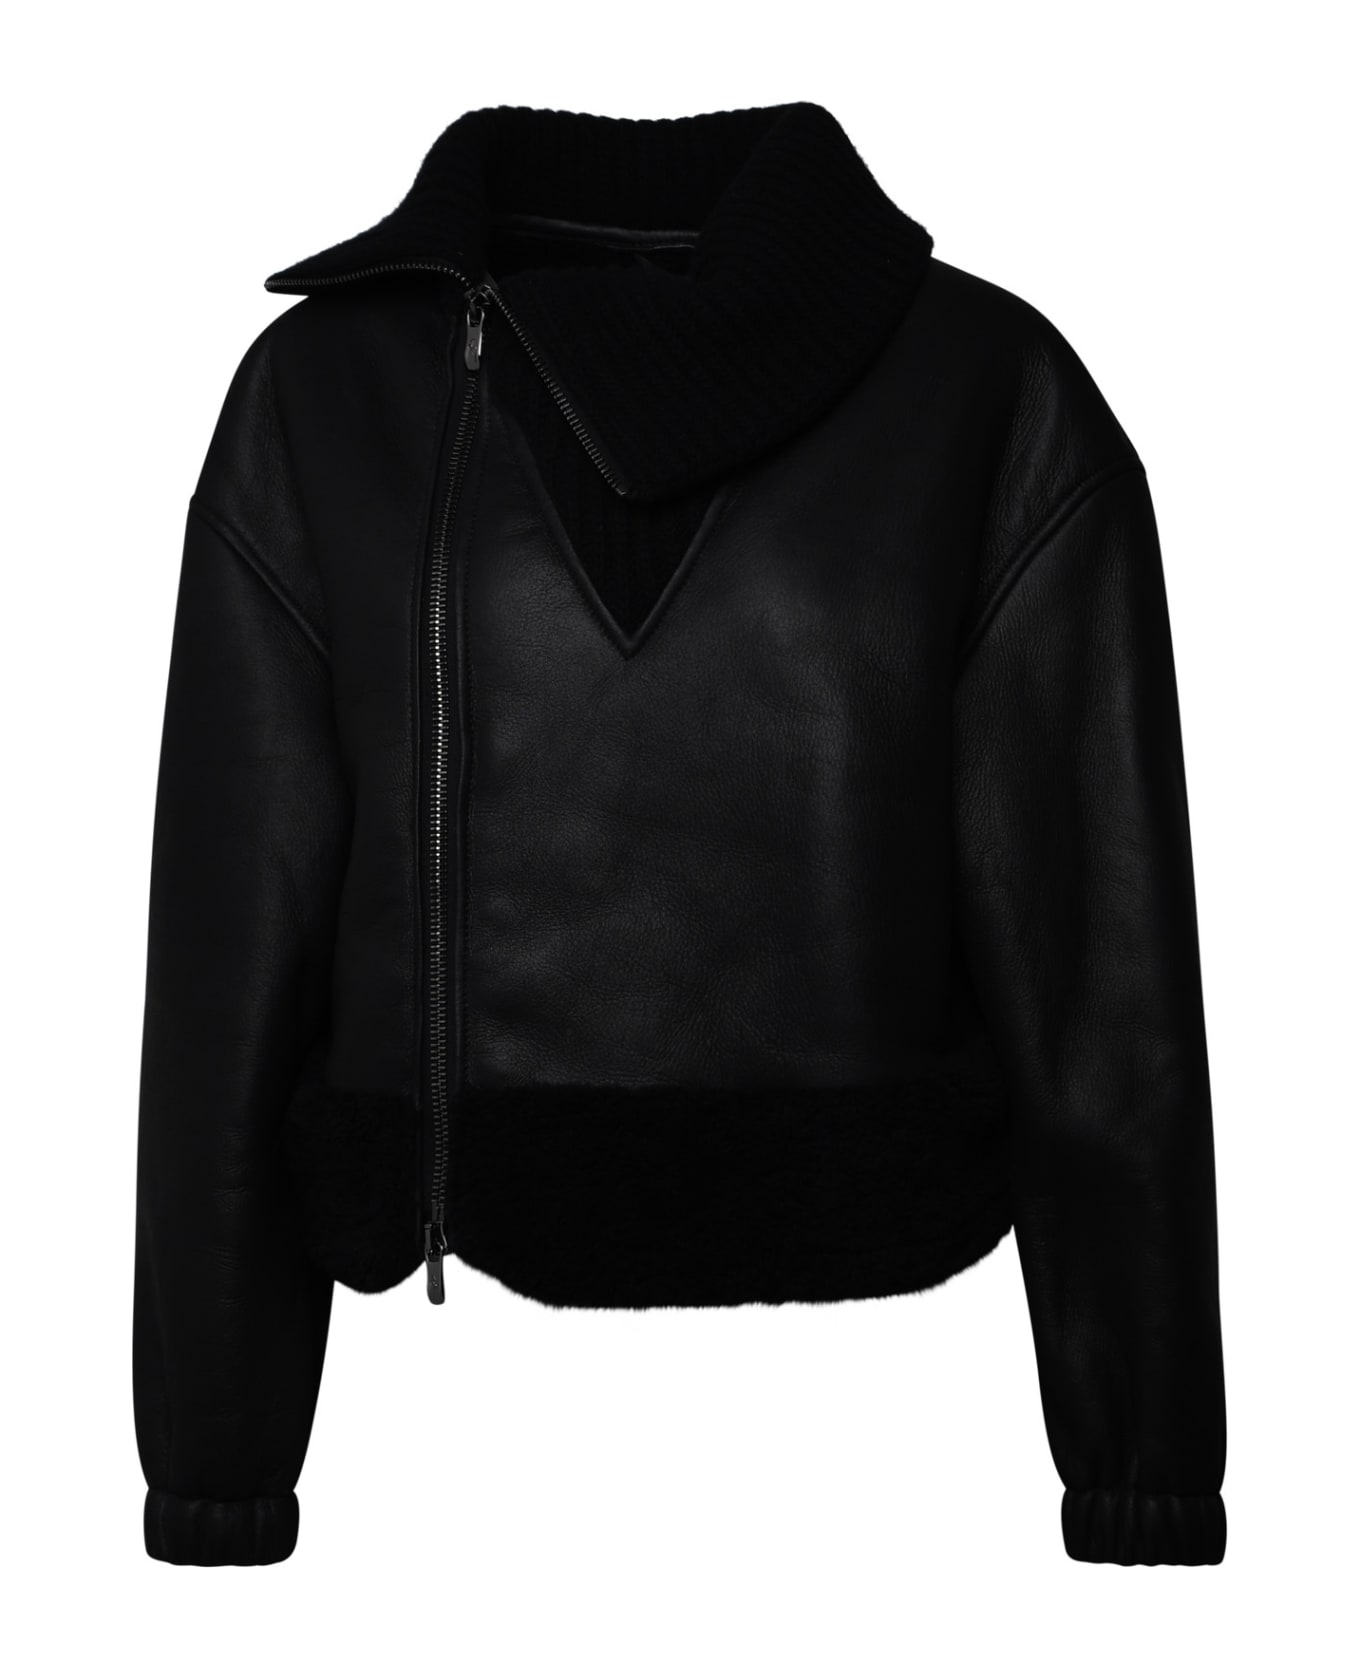 Ferrari Black Leather Jacket - Black